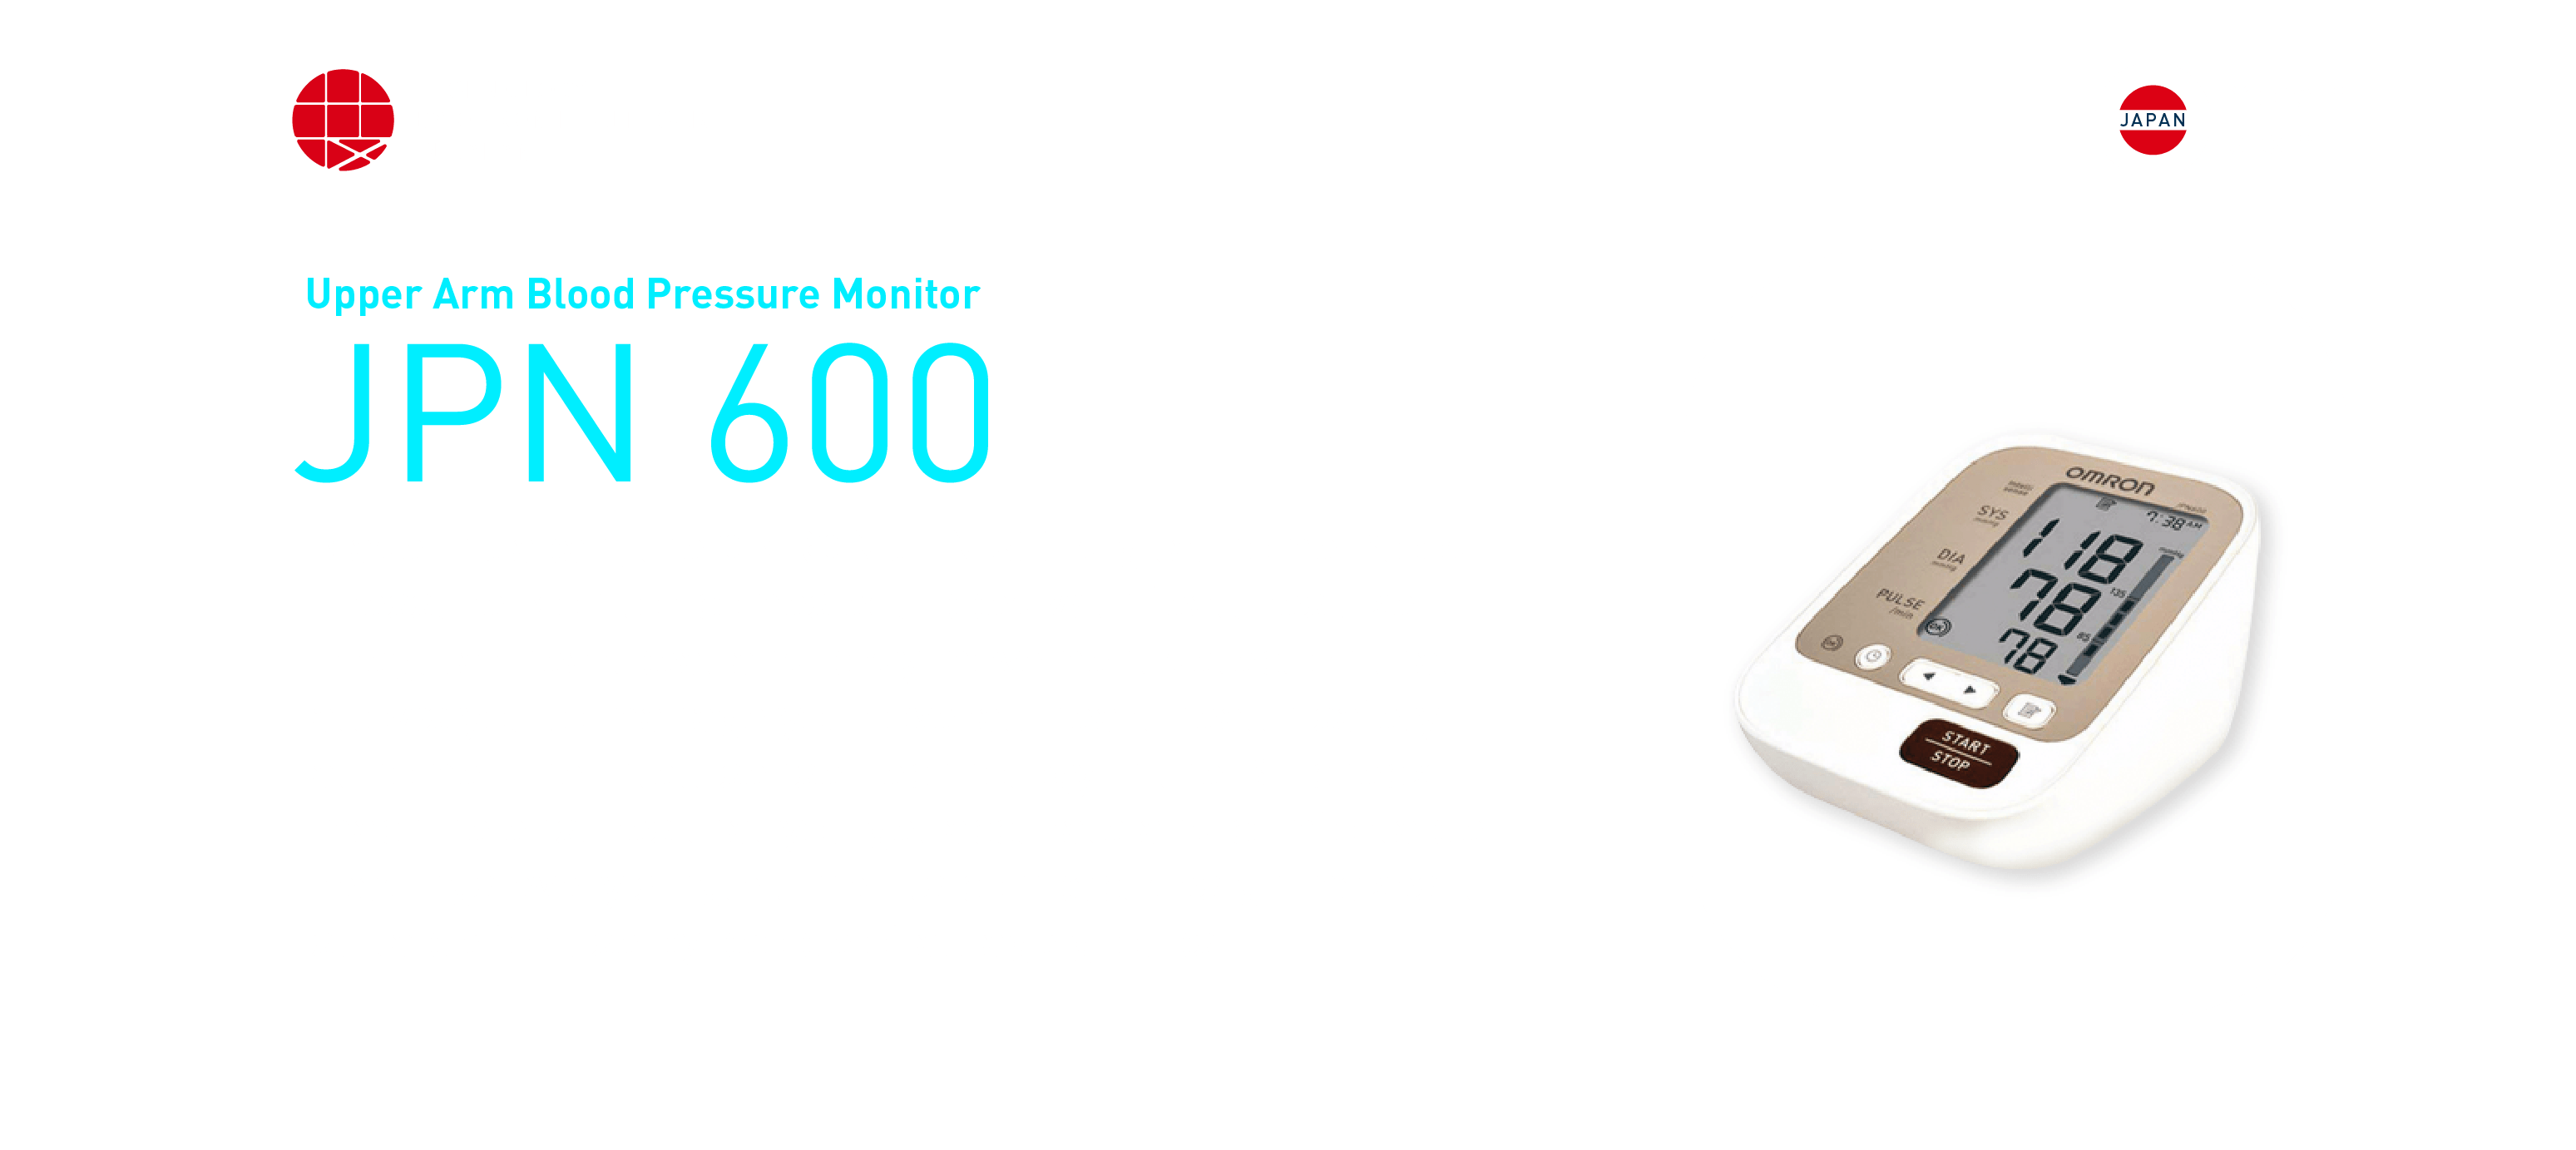 Website 1 Omron Healthcare